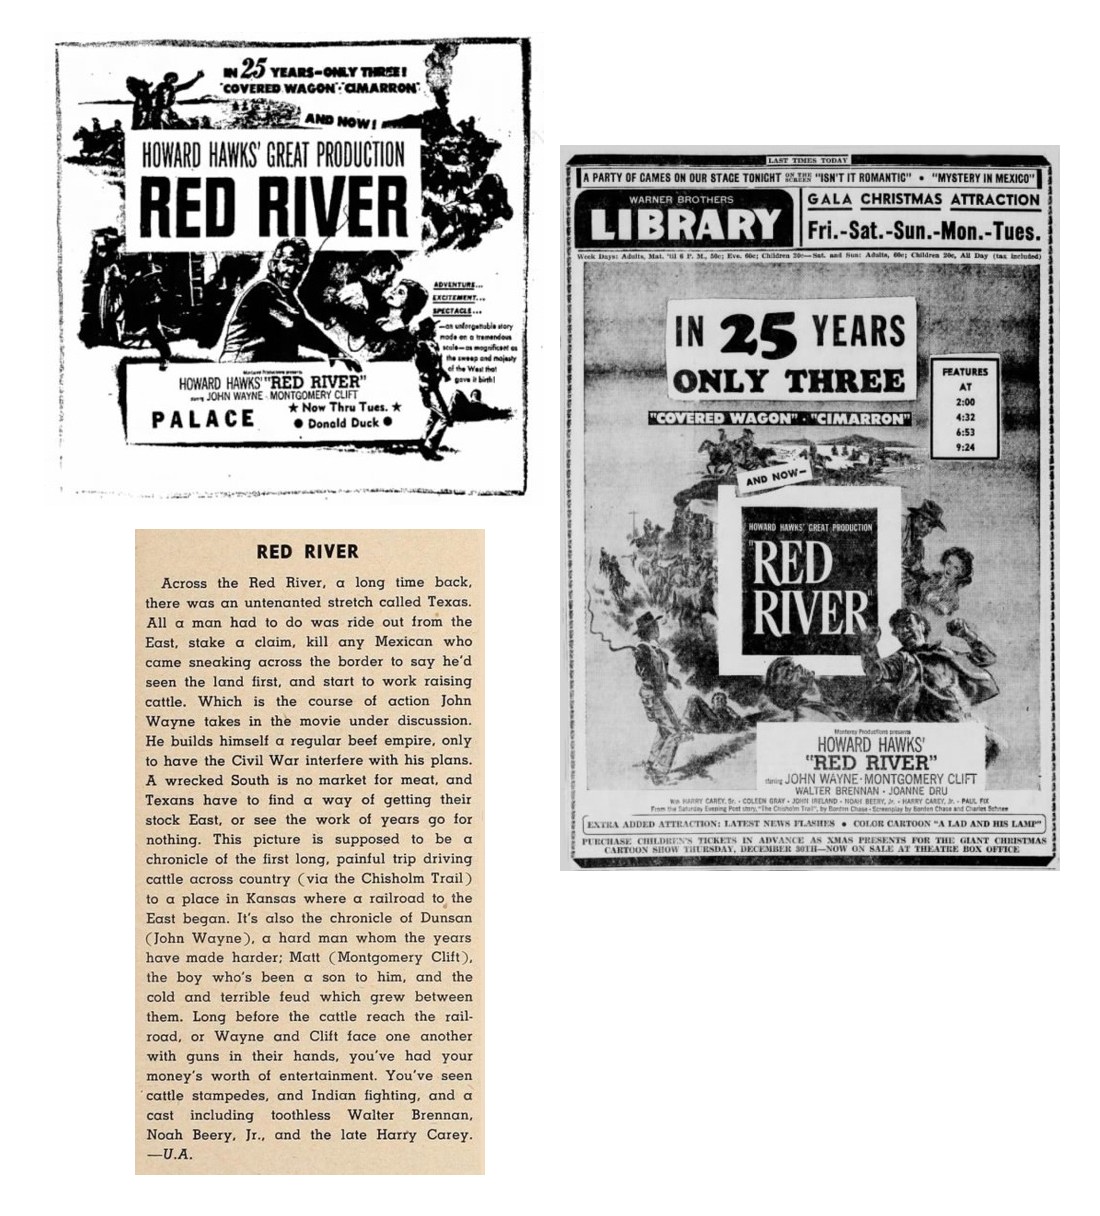 Red River film reviews cinema ads